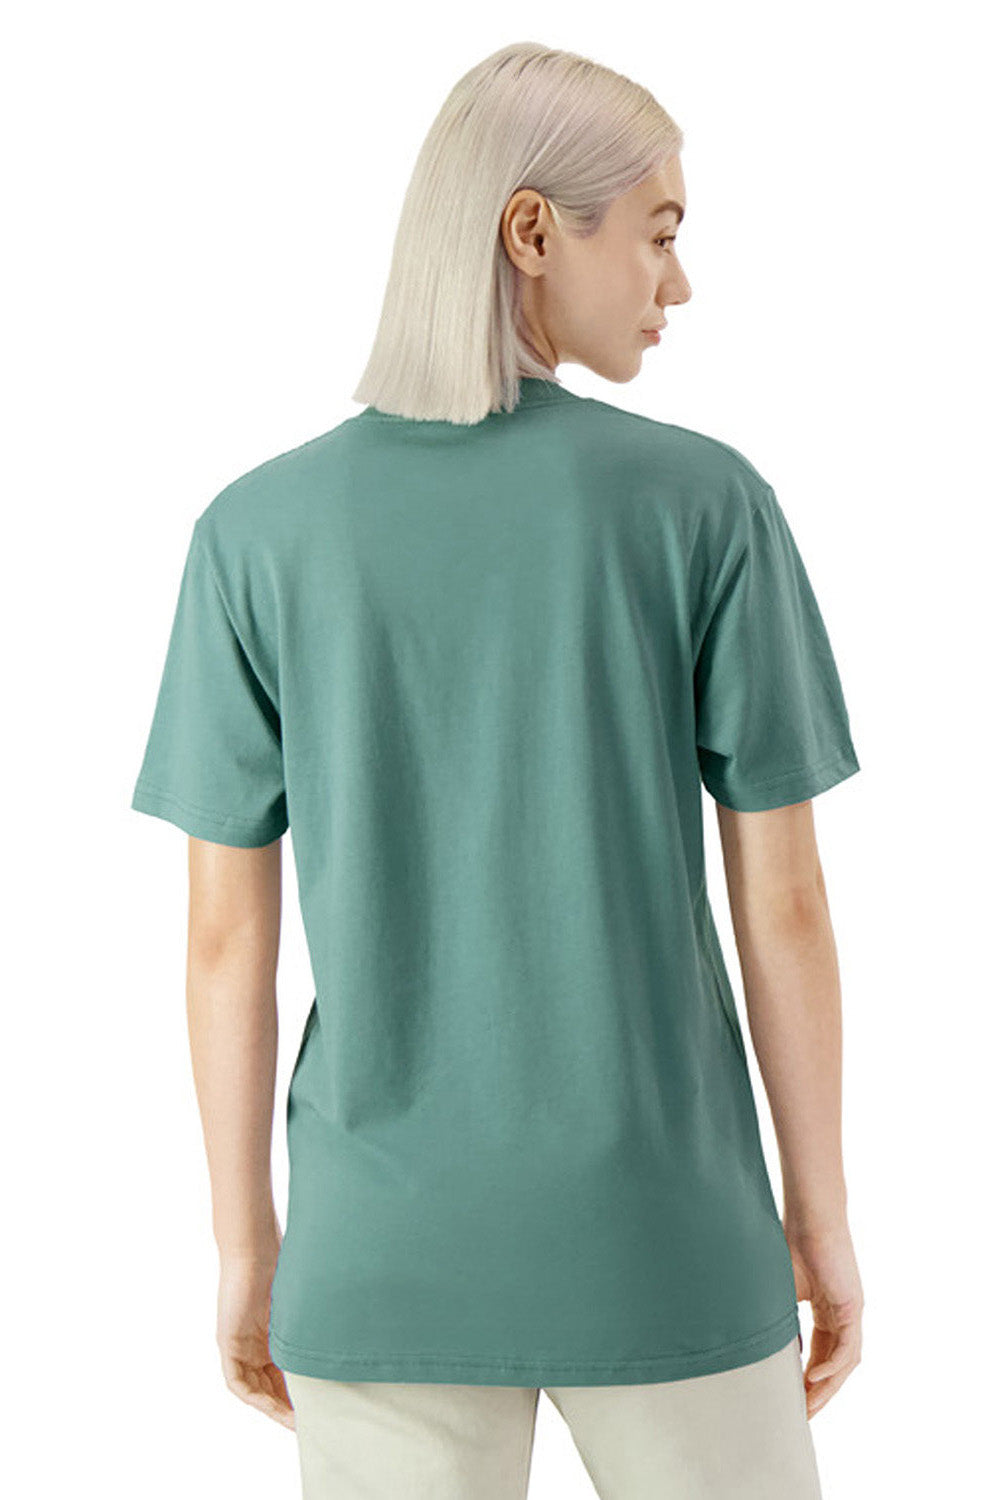 American Apparel 5389 Mens Sueded Cloud Short Sleeve Crewneck T-Shirt Arctic Green Model Back